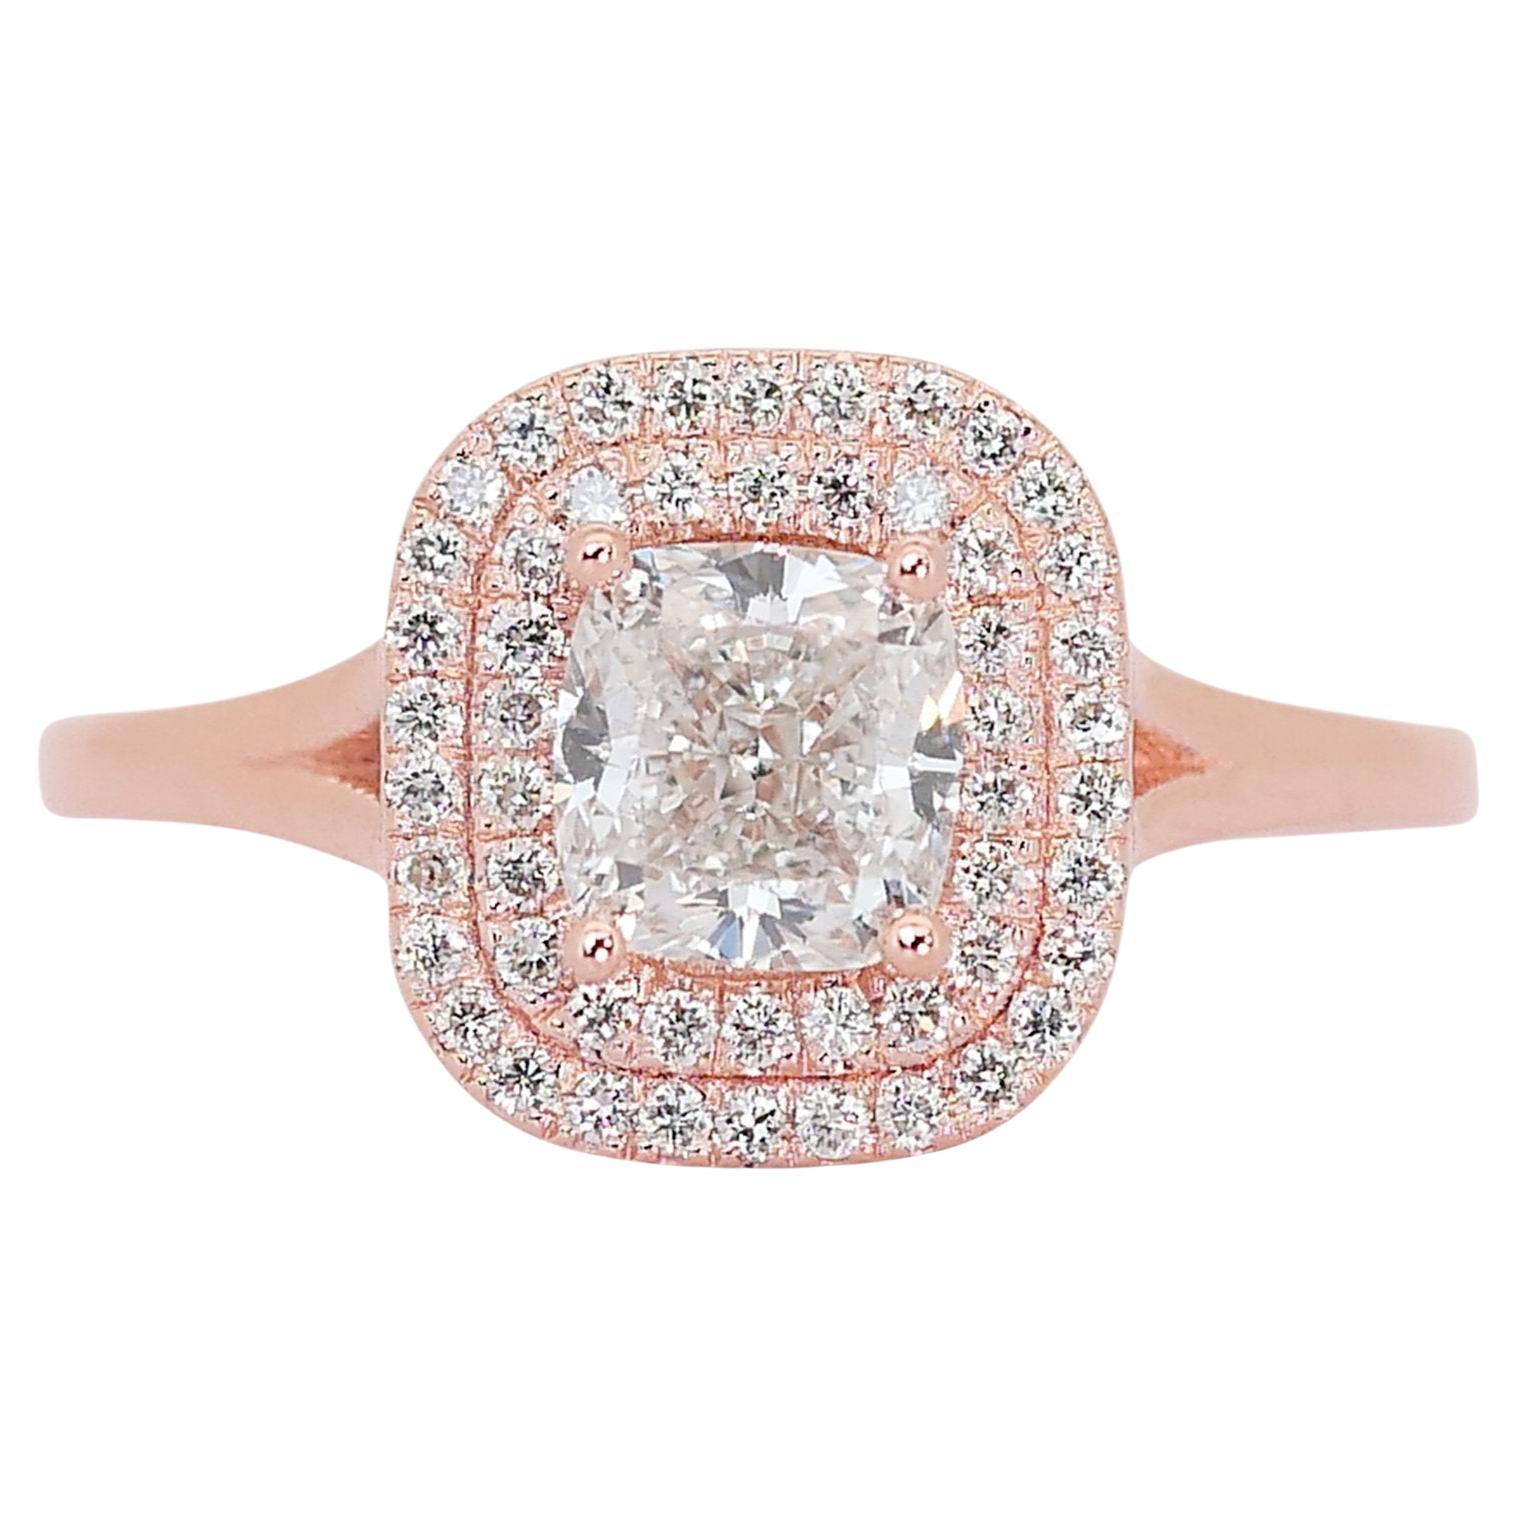 Elegant 1.41ct Diamonds Double Halo Ring in 18k Rose Gold - GIA Certified